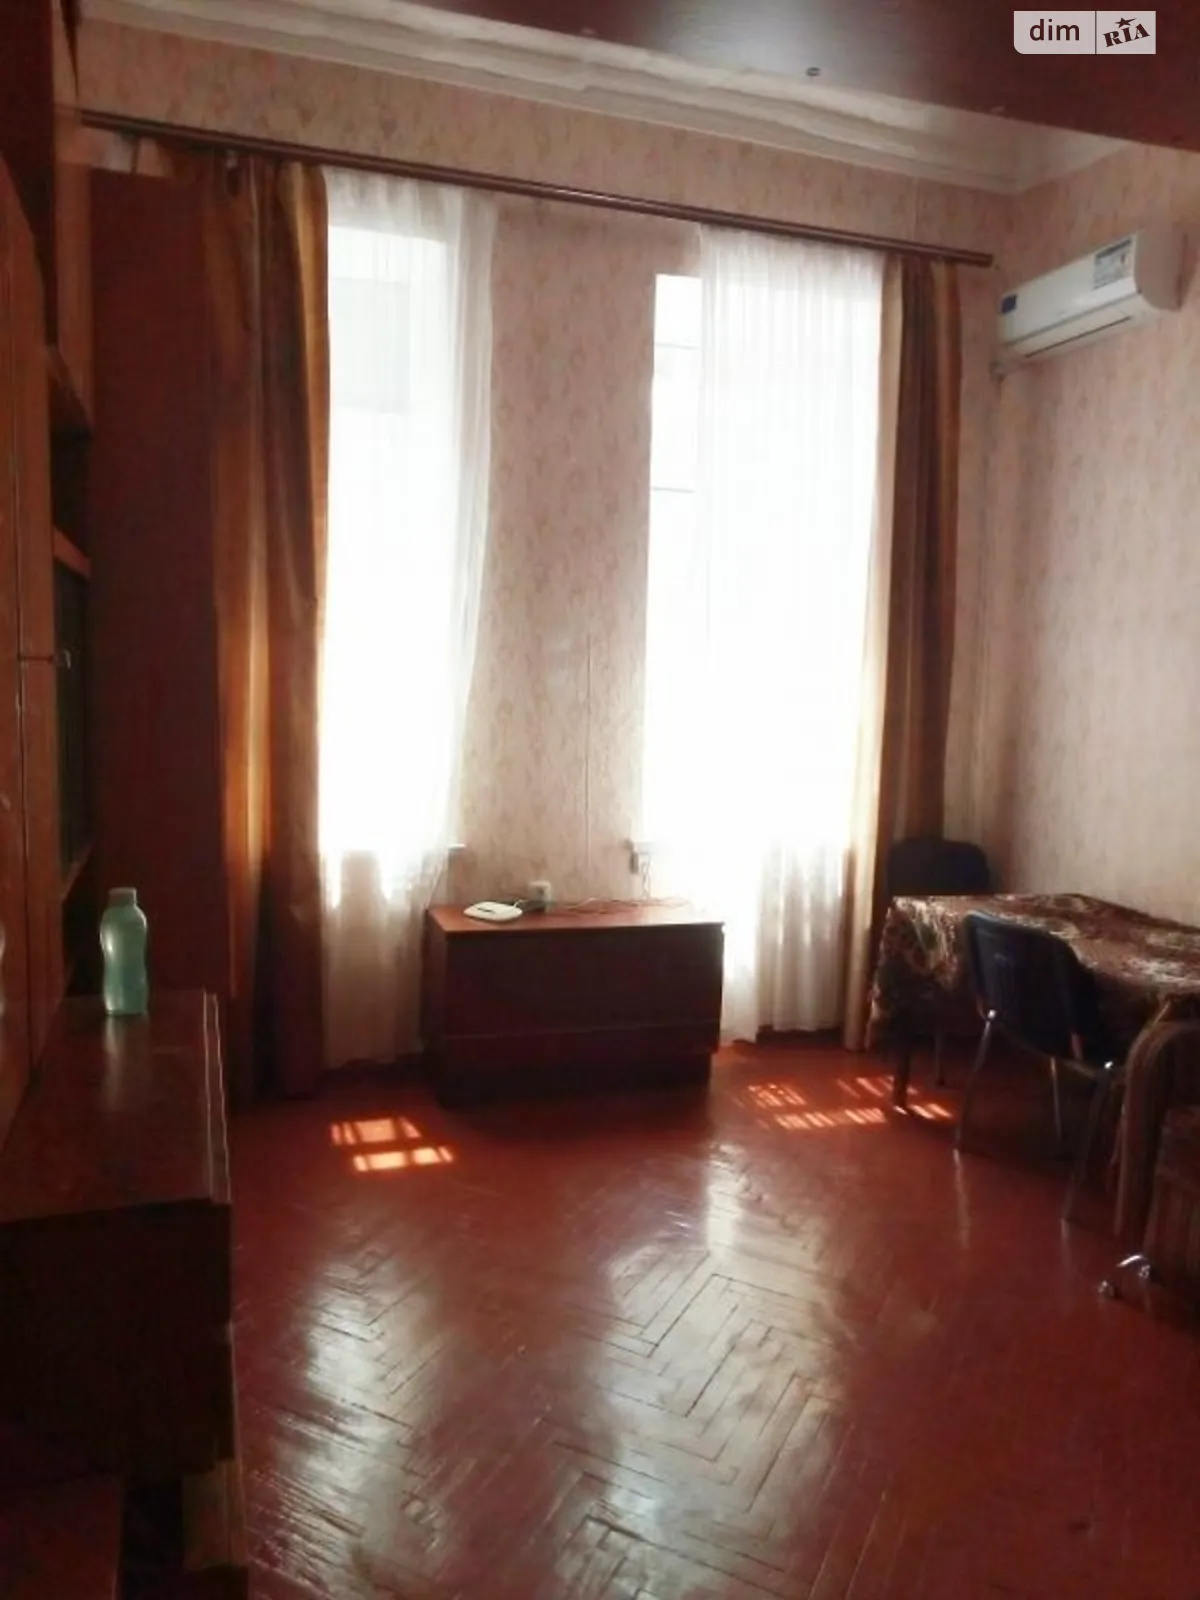 Продается комната 26 кв. м в Одессе, цена: 14500 $ - фото 1